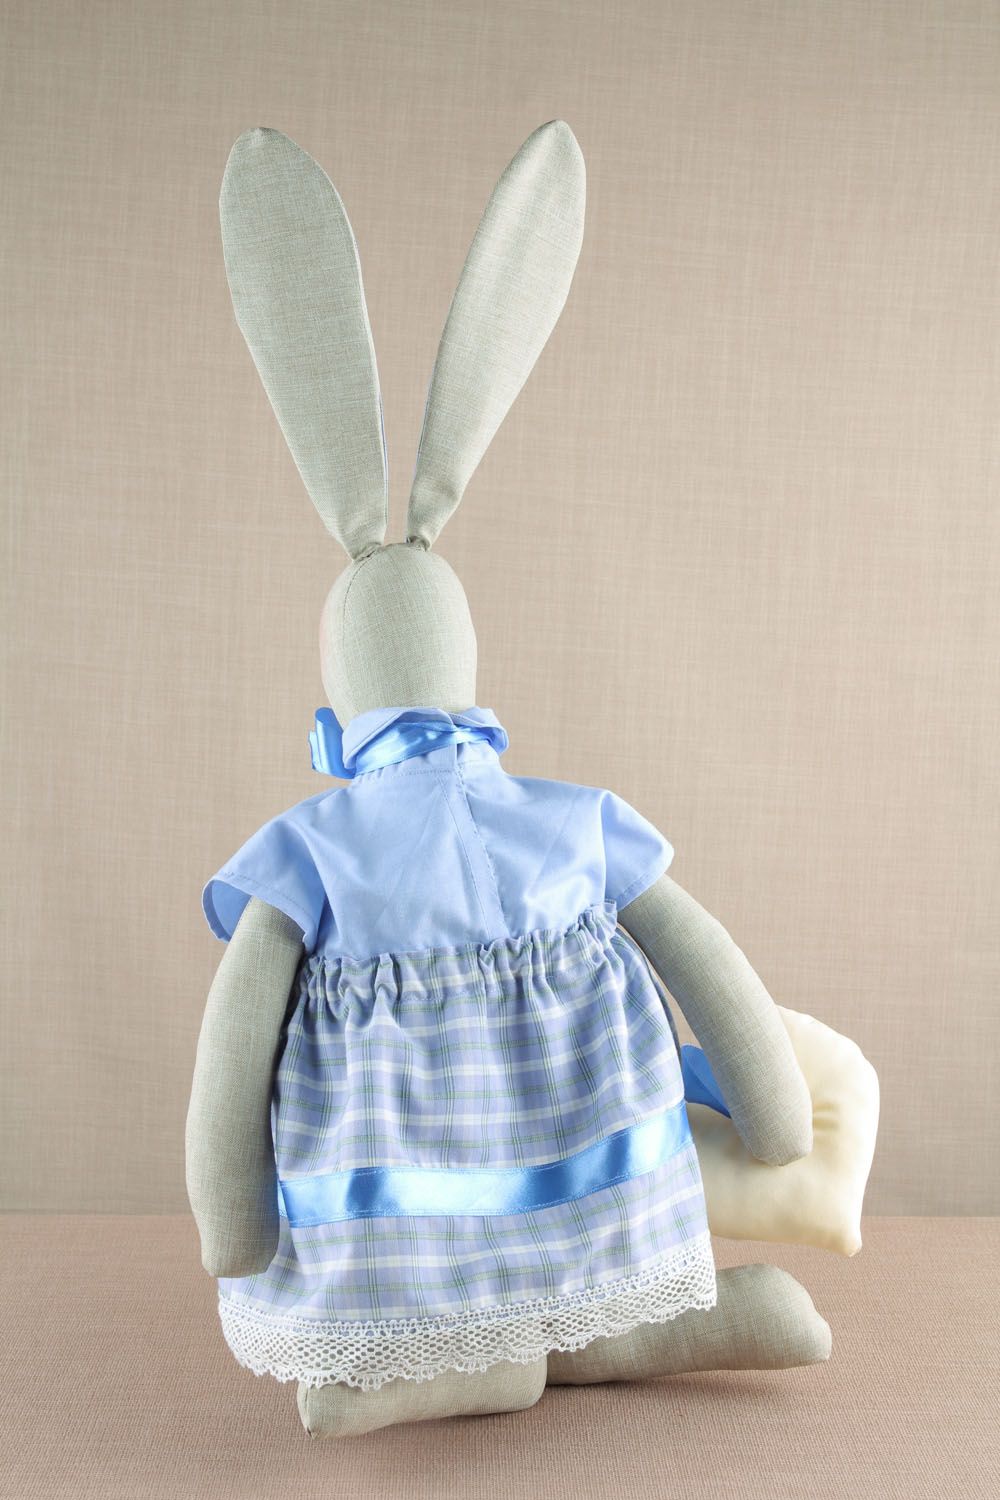 Handmade soft toy Bunny in Blue Dress photo 2